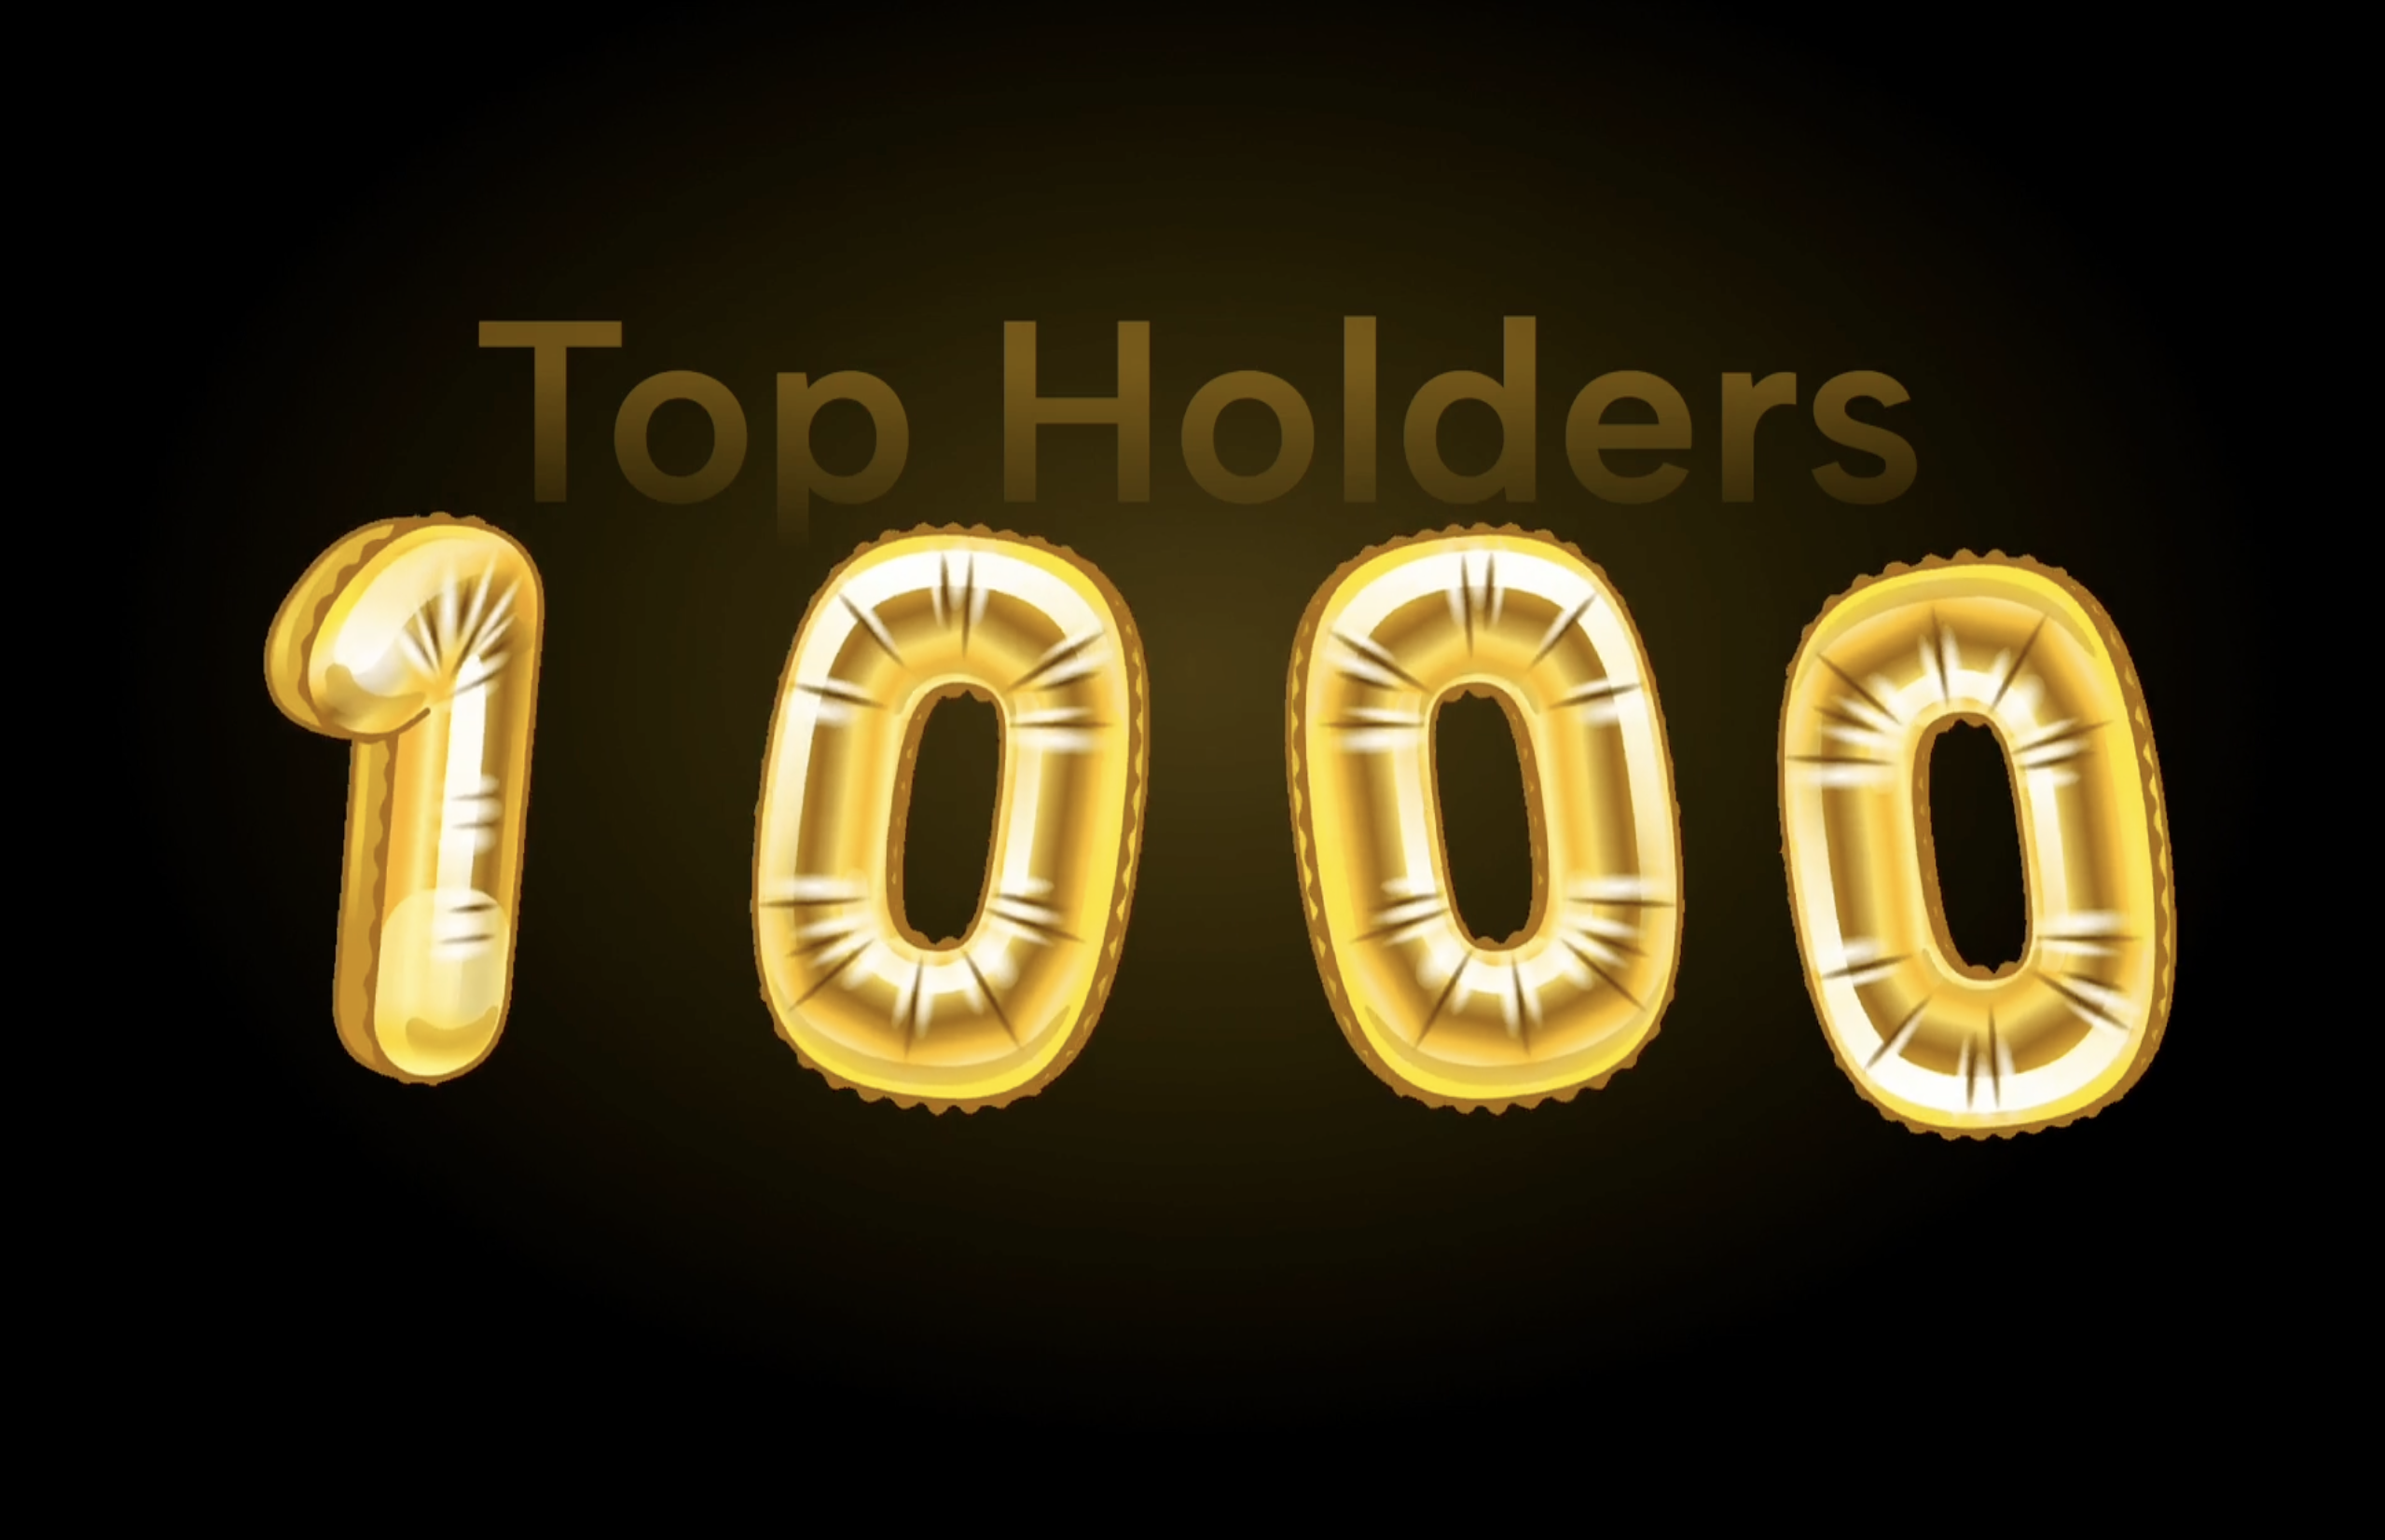 Introducing the Top 1,000 Holders Rank on Iris Bot by Flooz.xyz